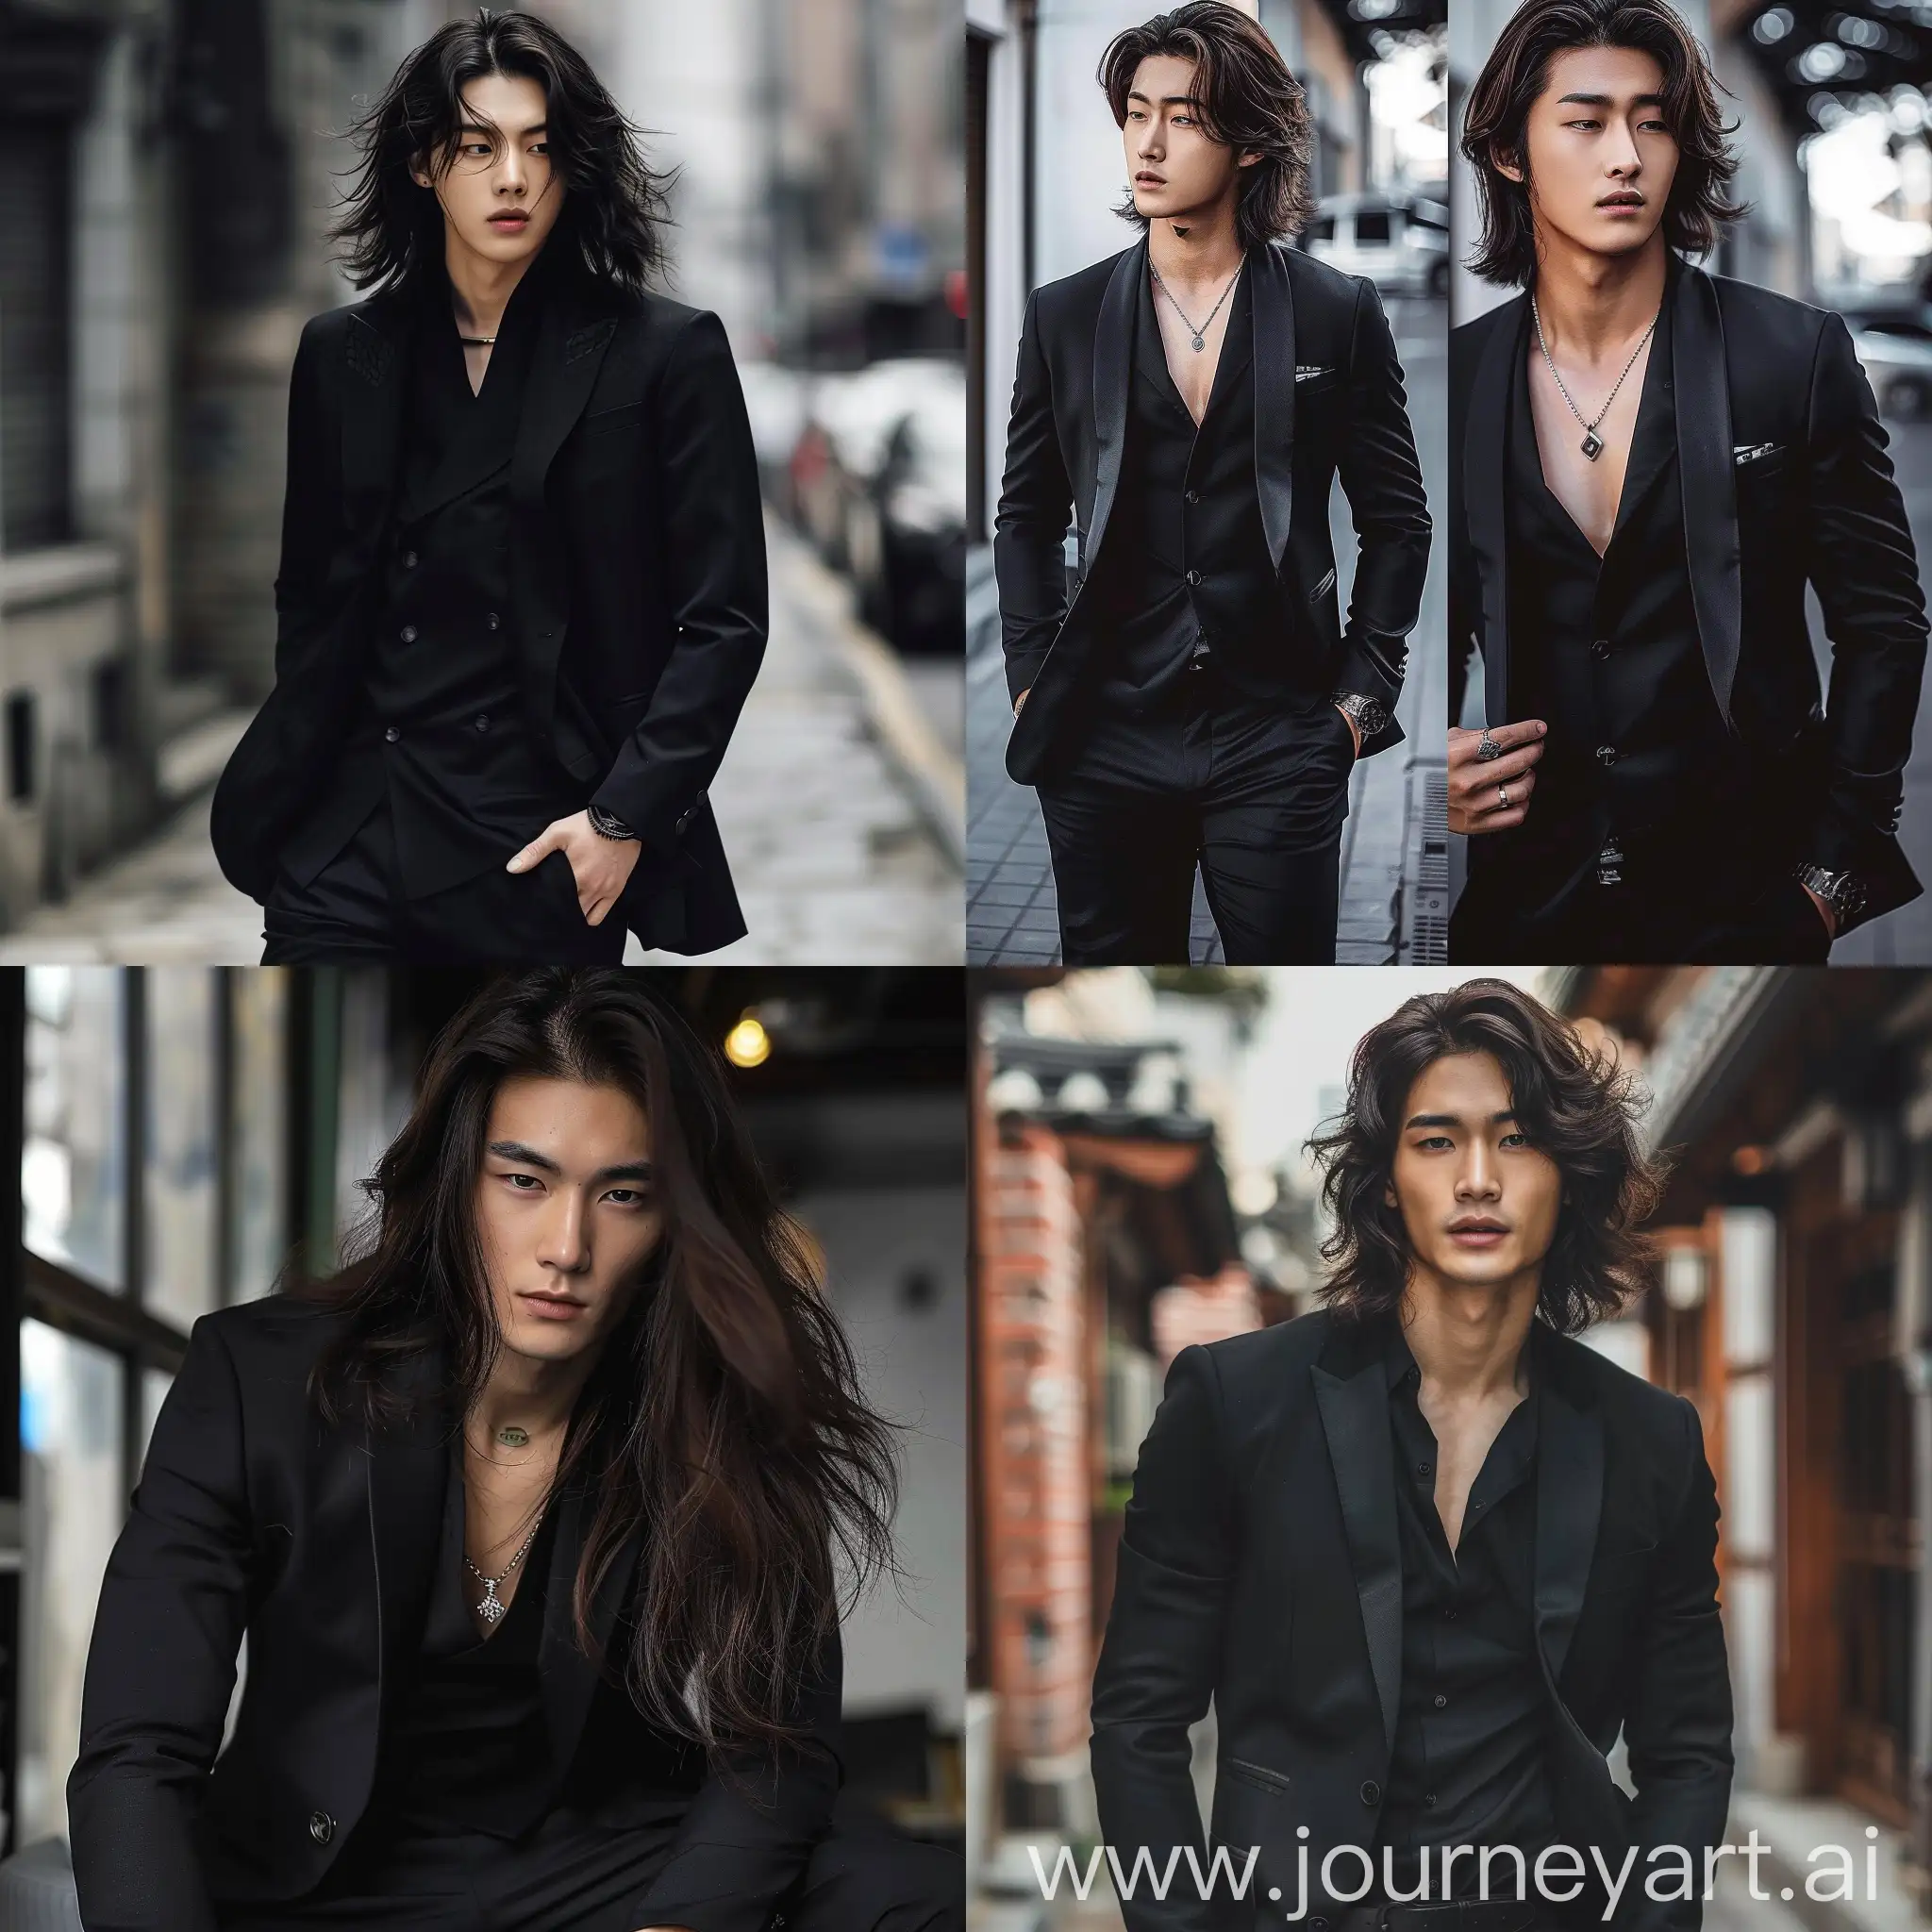 Korean boy mafia vibe well built body in black suit a bit long hair ... 